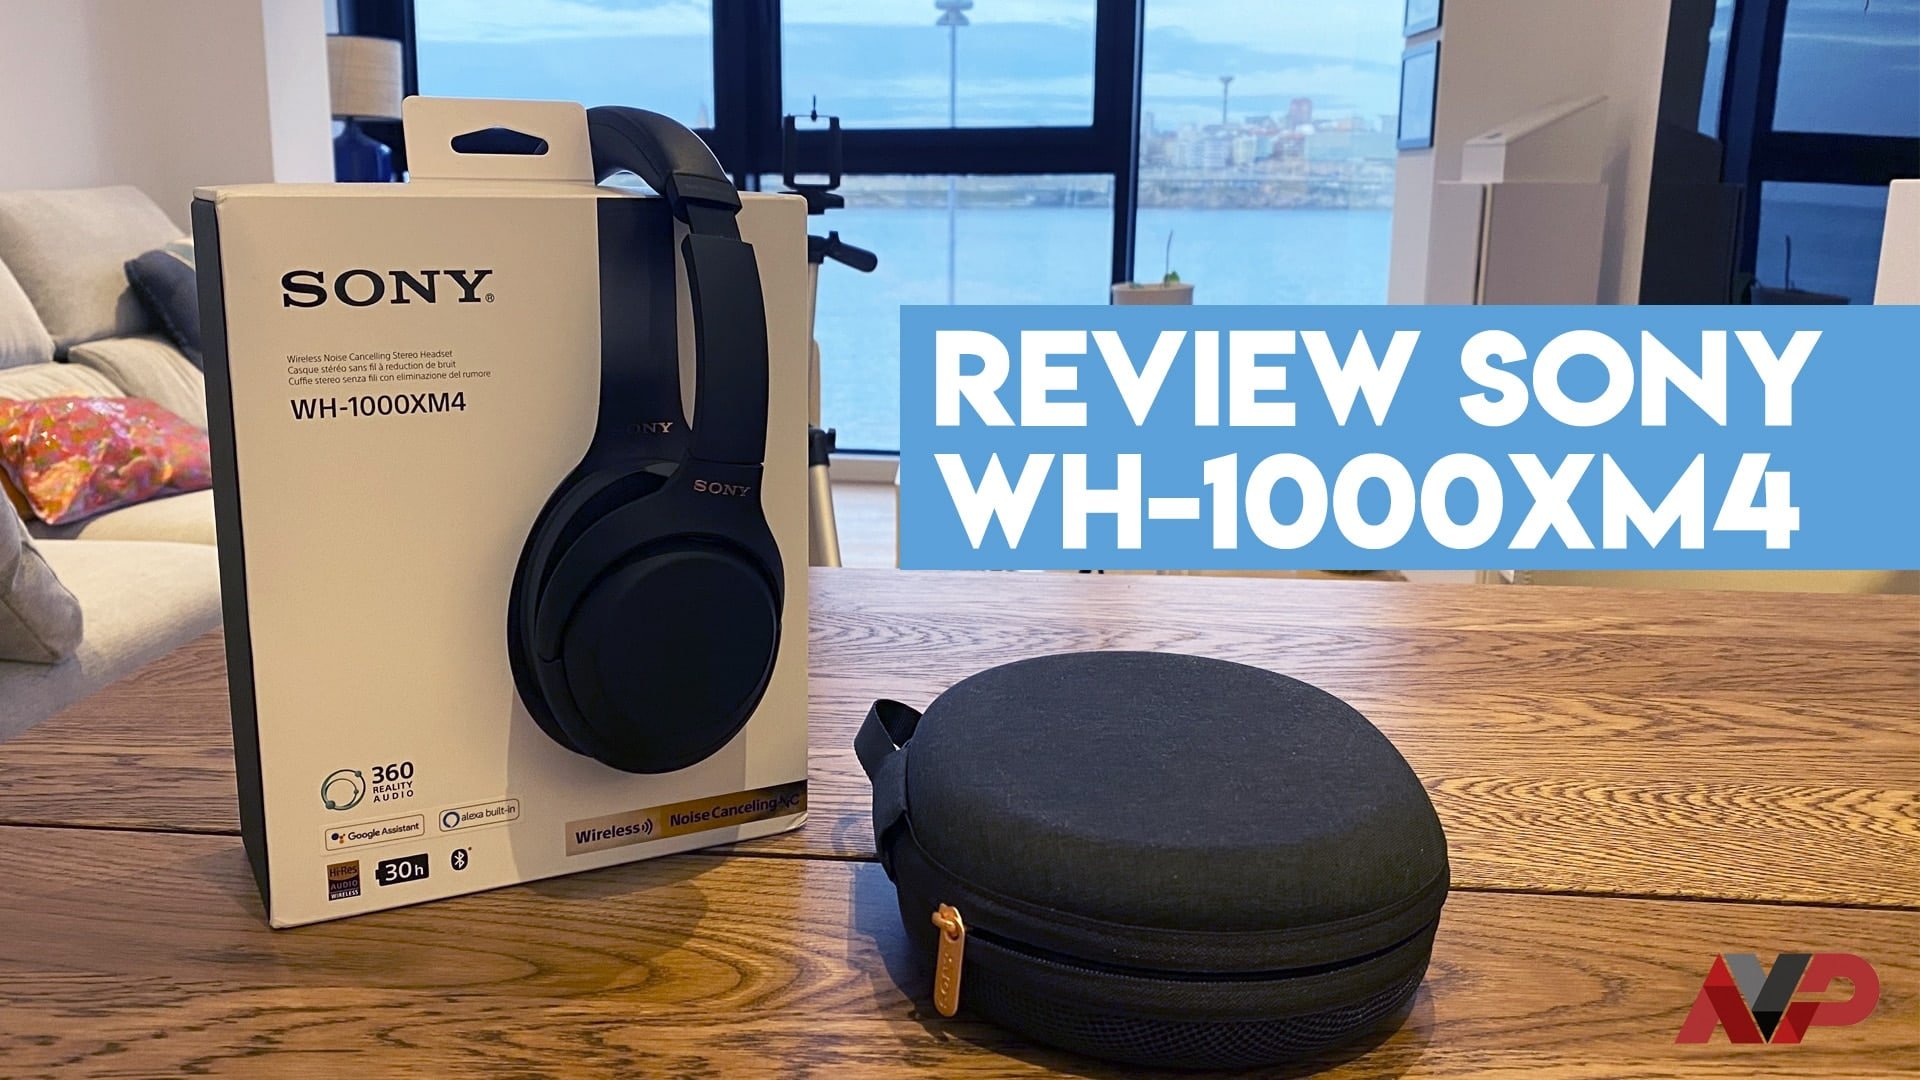 Review Sony WH-1000XM4: análisis del diseño, características